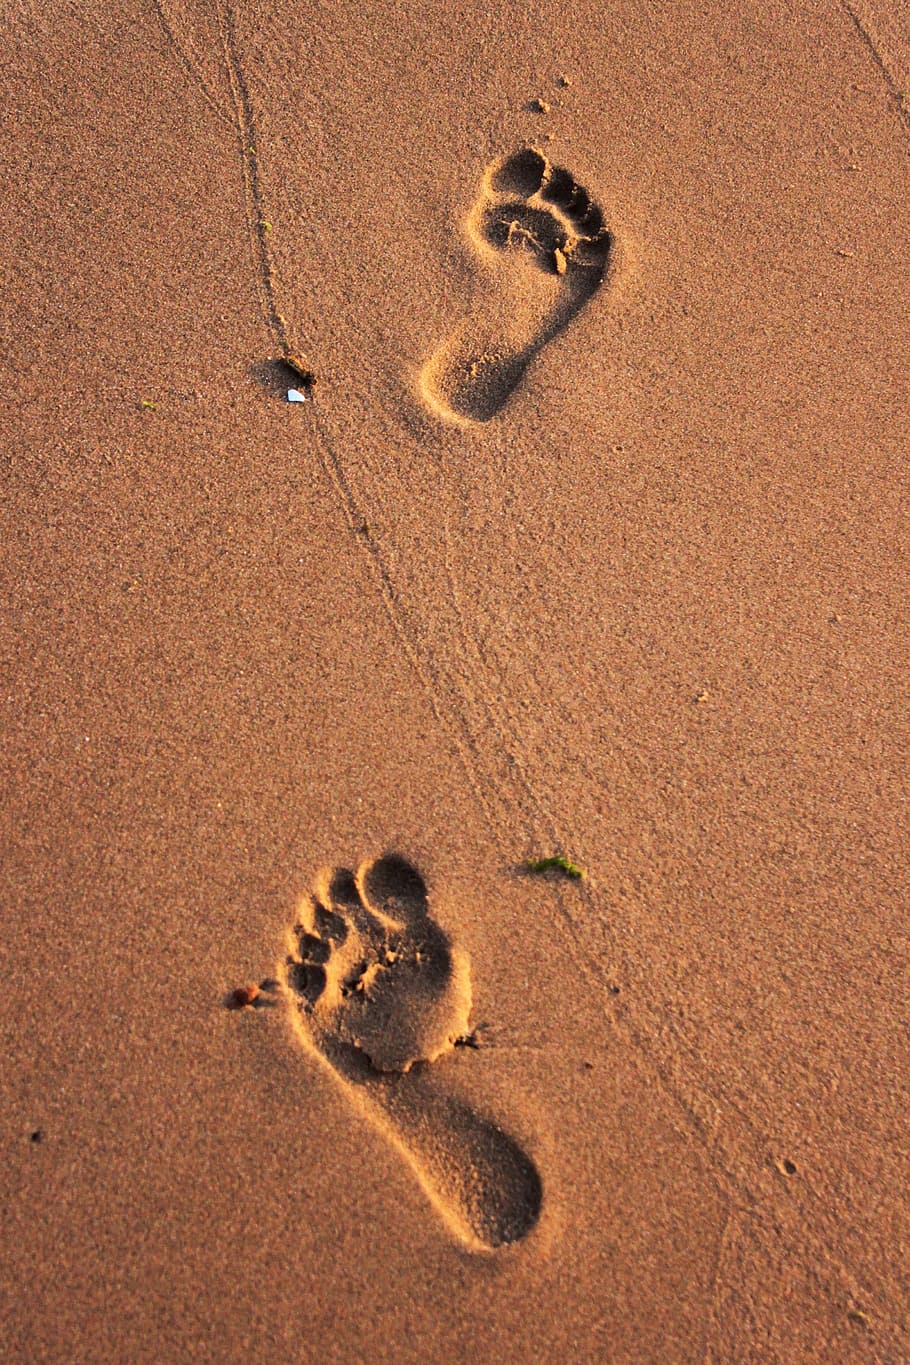 Beach, Iz, Footprint, Marine, environmental, sand, animal track, paw print, track - imprint, high angle view